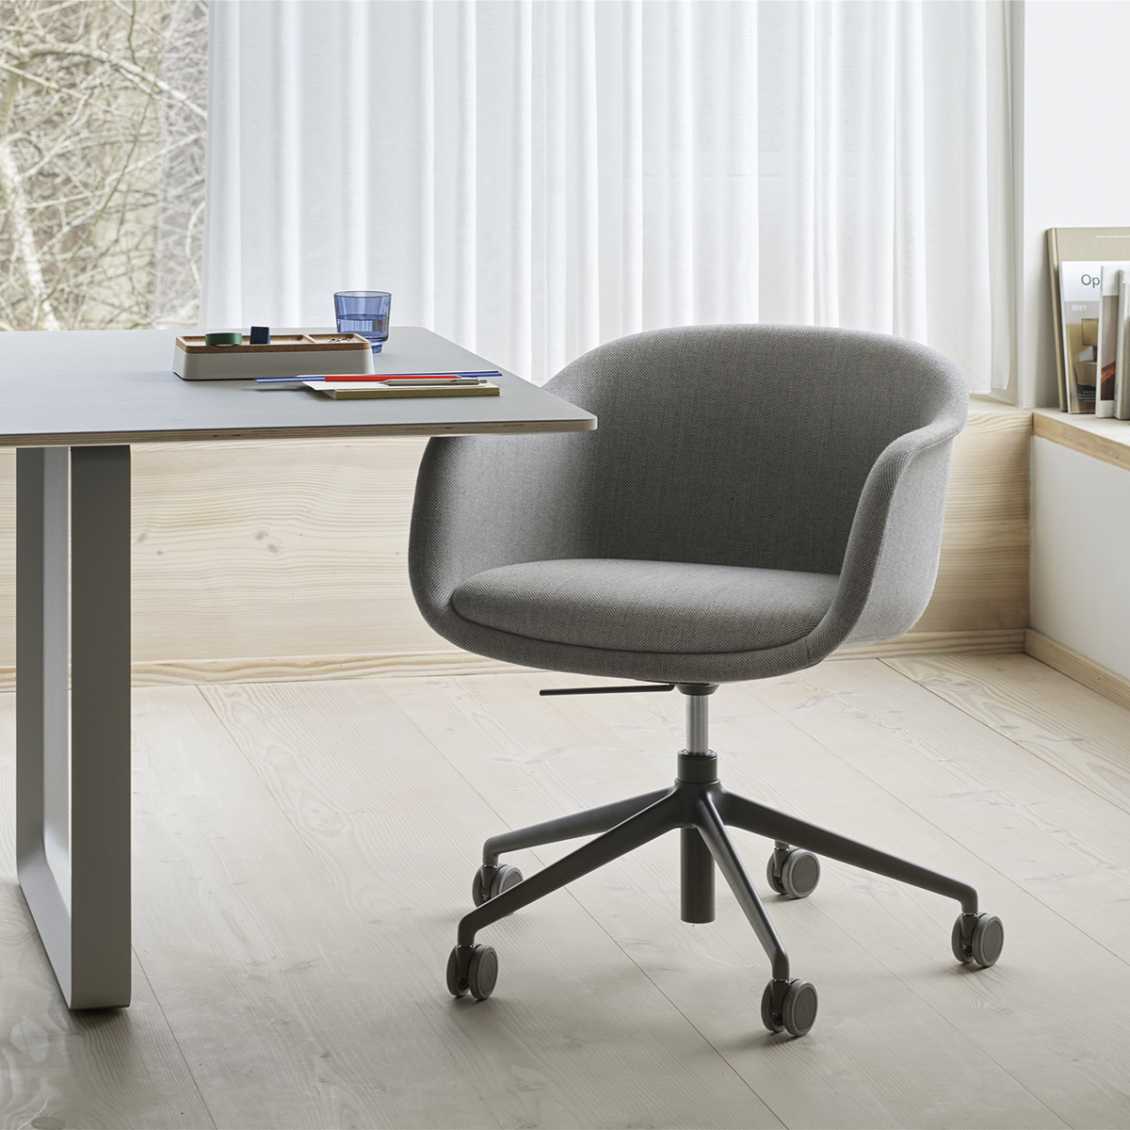 https://www.fundesign.nl/media/catalog/product/m/u/muuto-fiber-conference-armchair-with-wheels-sfeer1_1.jpg